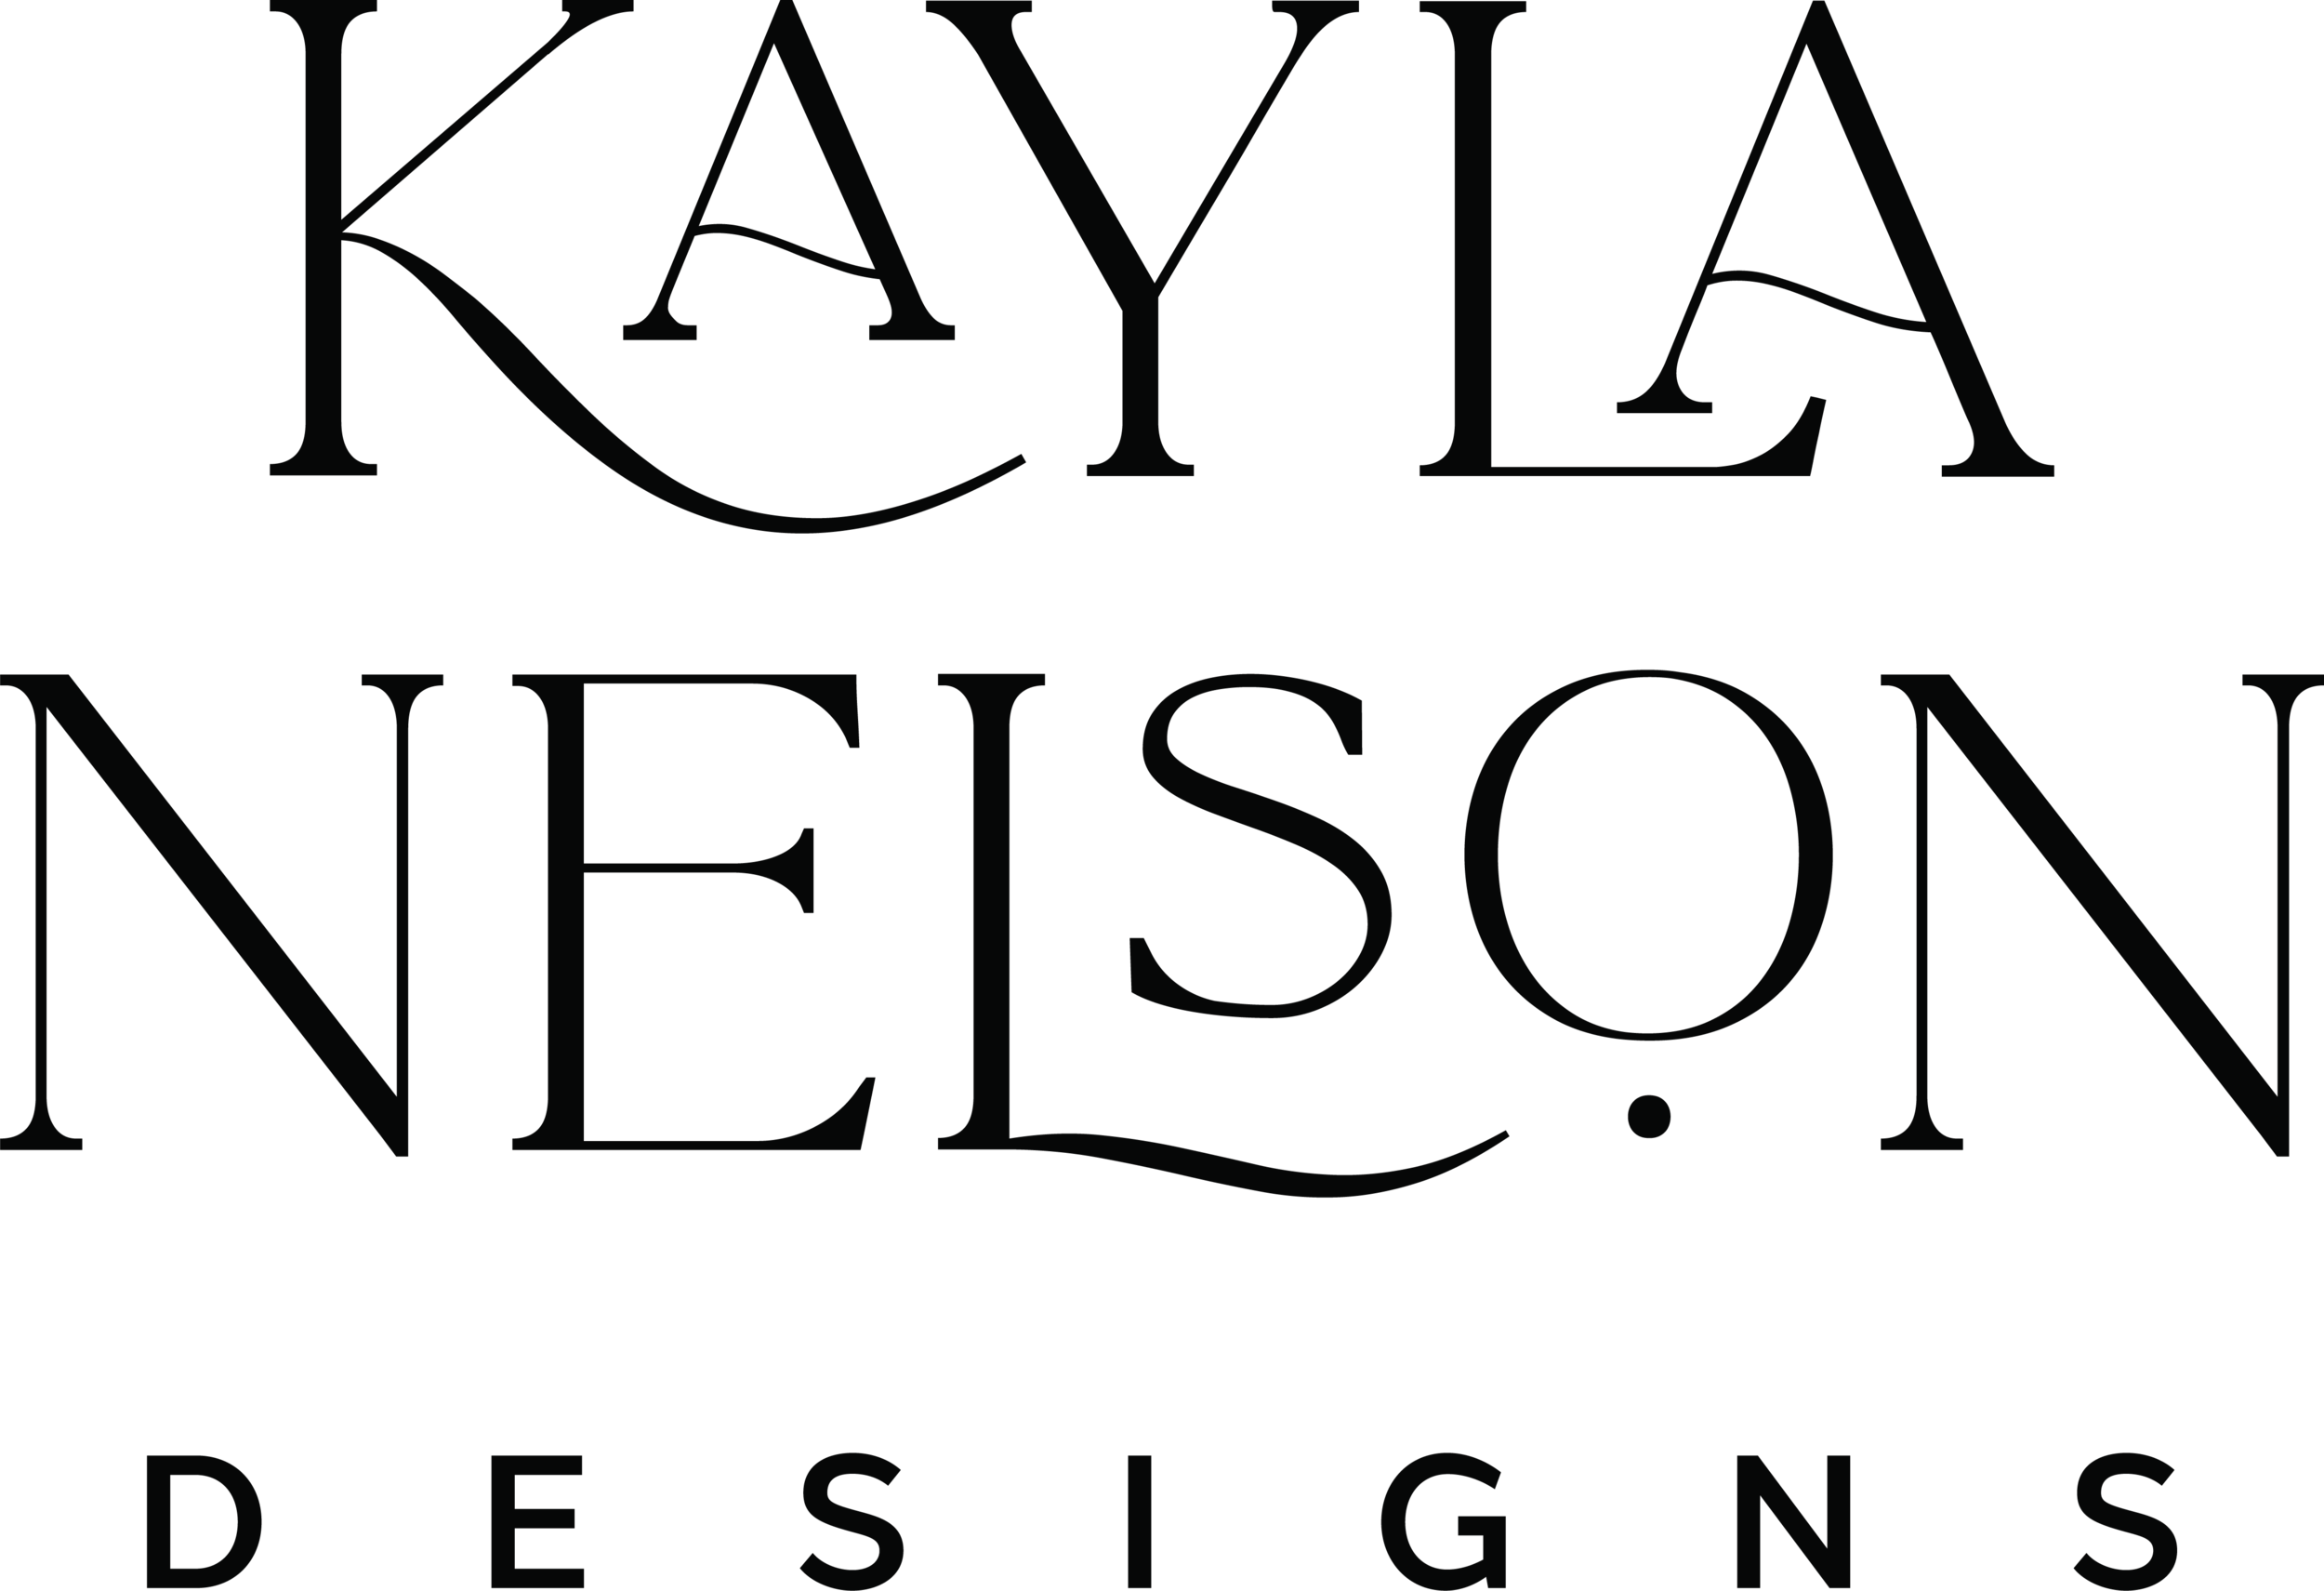 Kayla Nelson